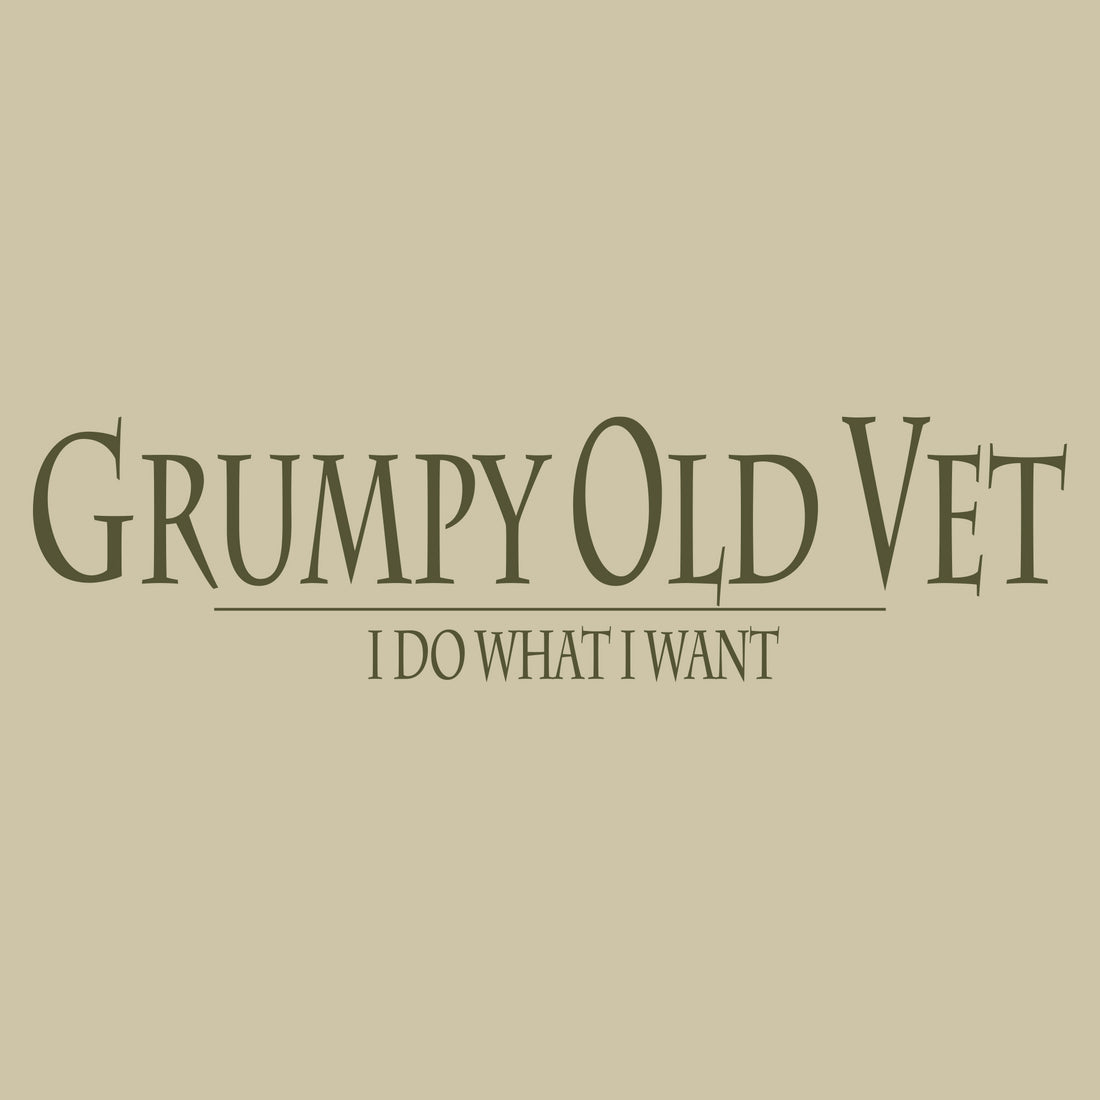 Military Shirts - Grumpy Old Vet 